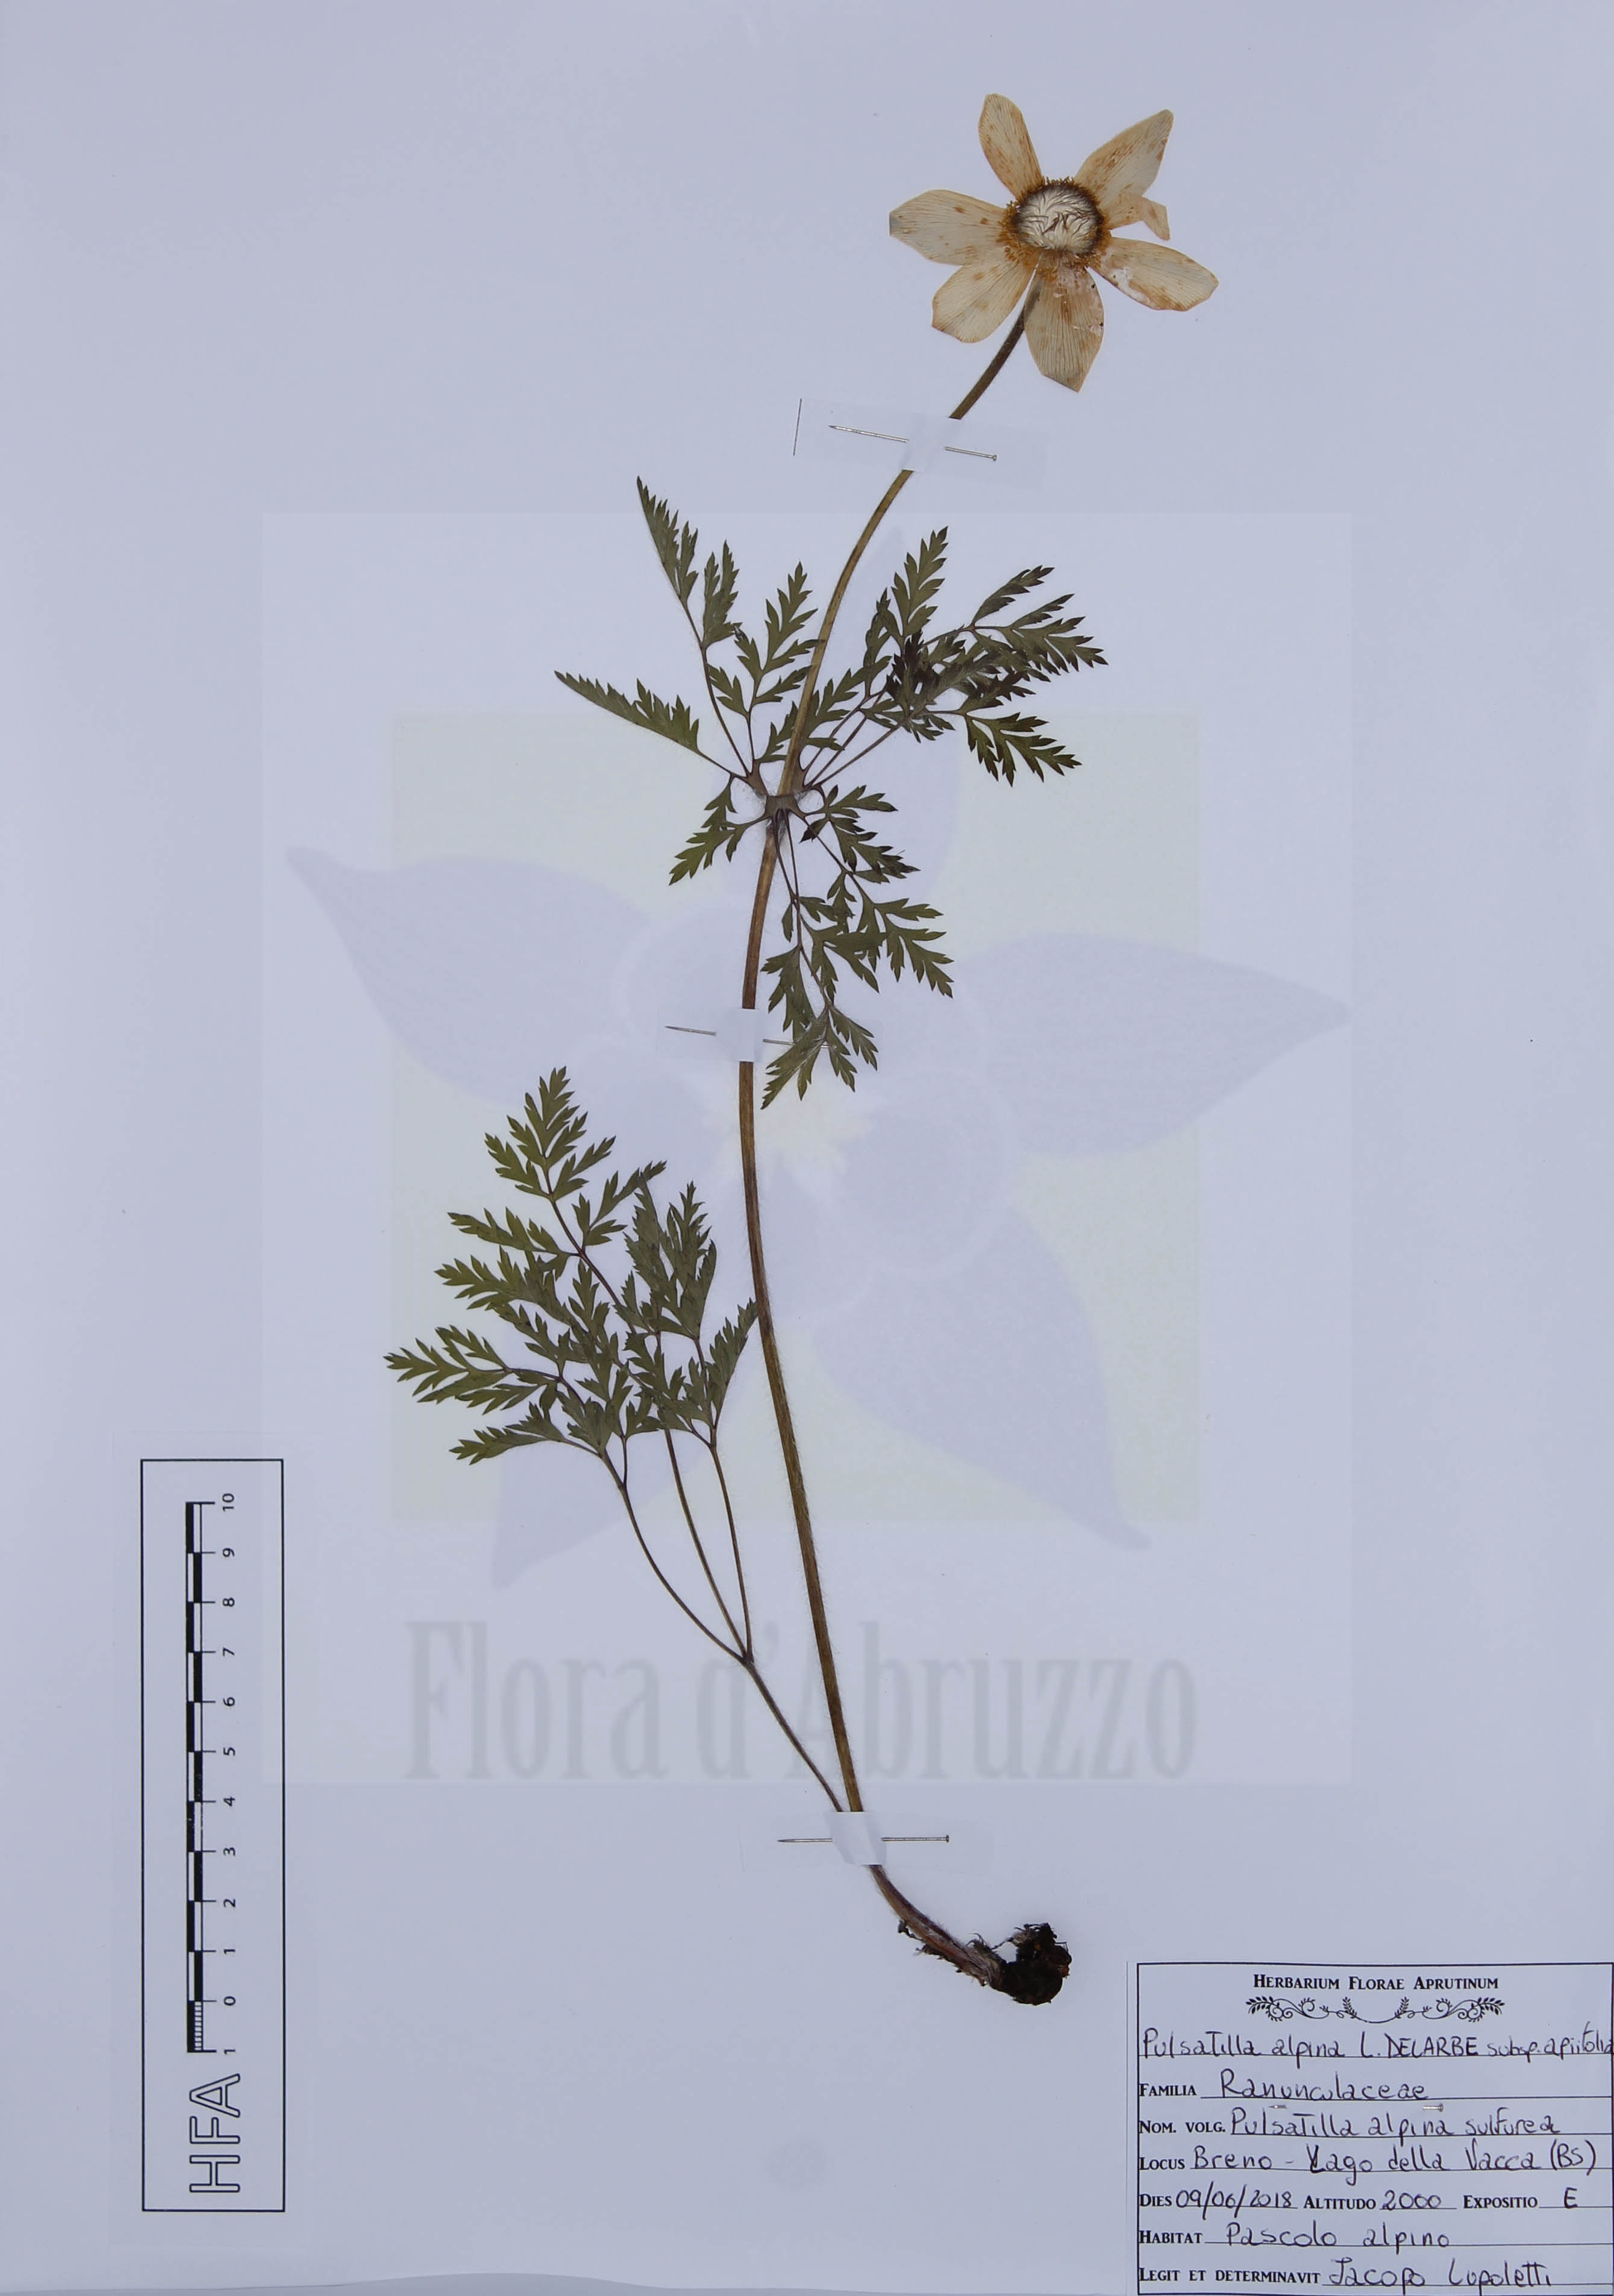 Pulsatilla alpina (L.) Delarbre subsp. apiifolia (Scop.) Nyman